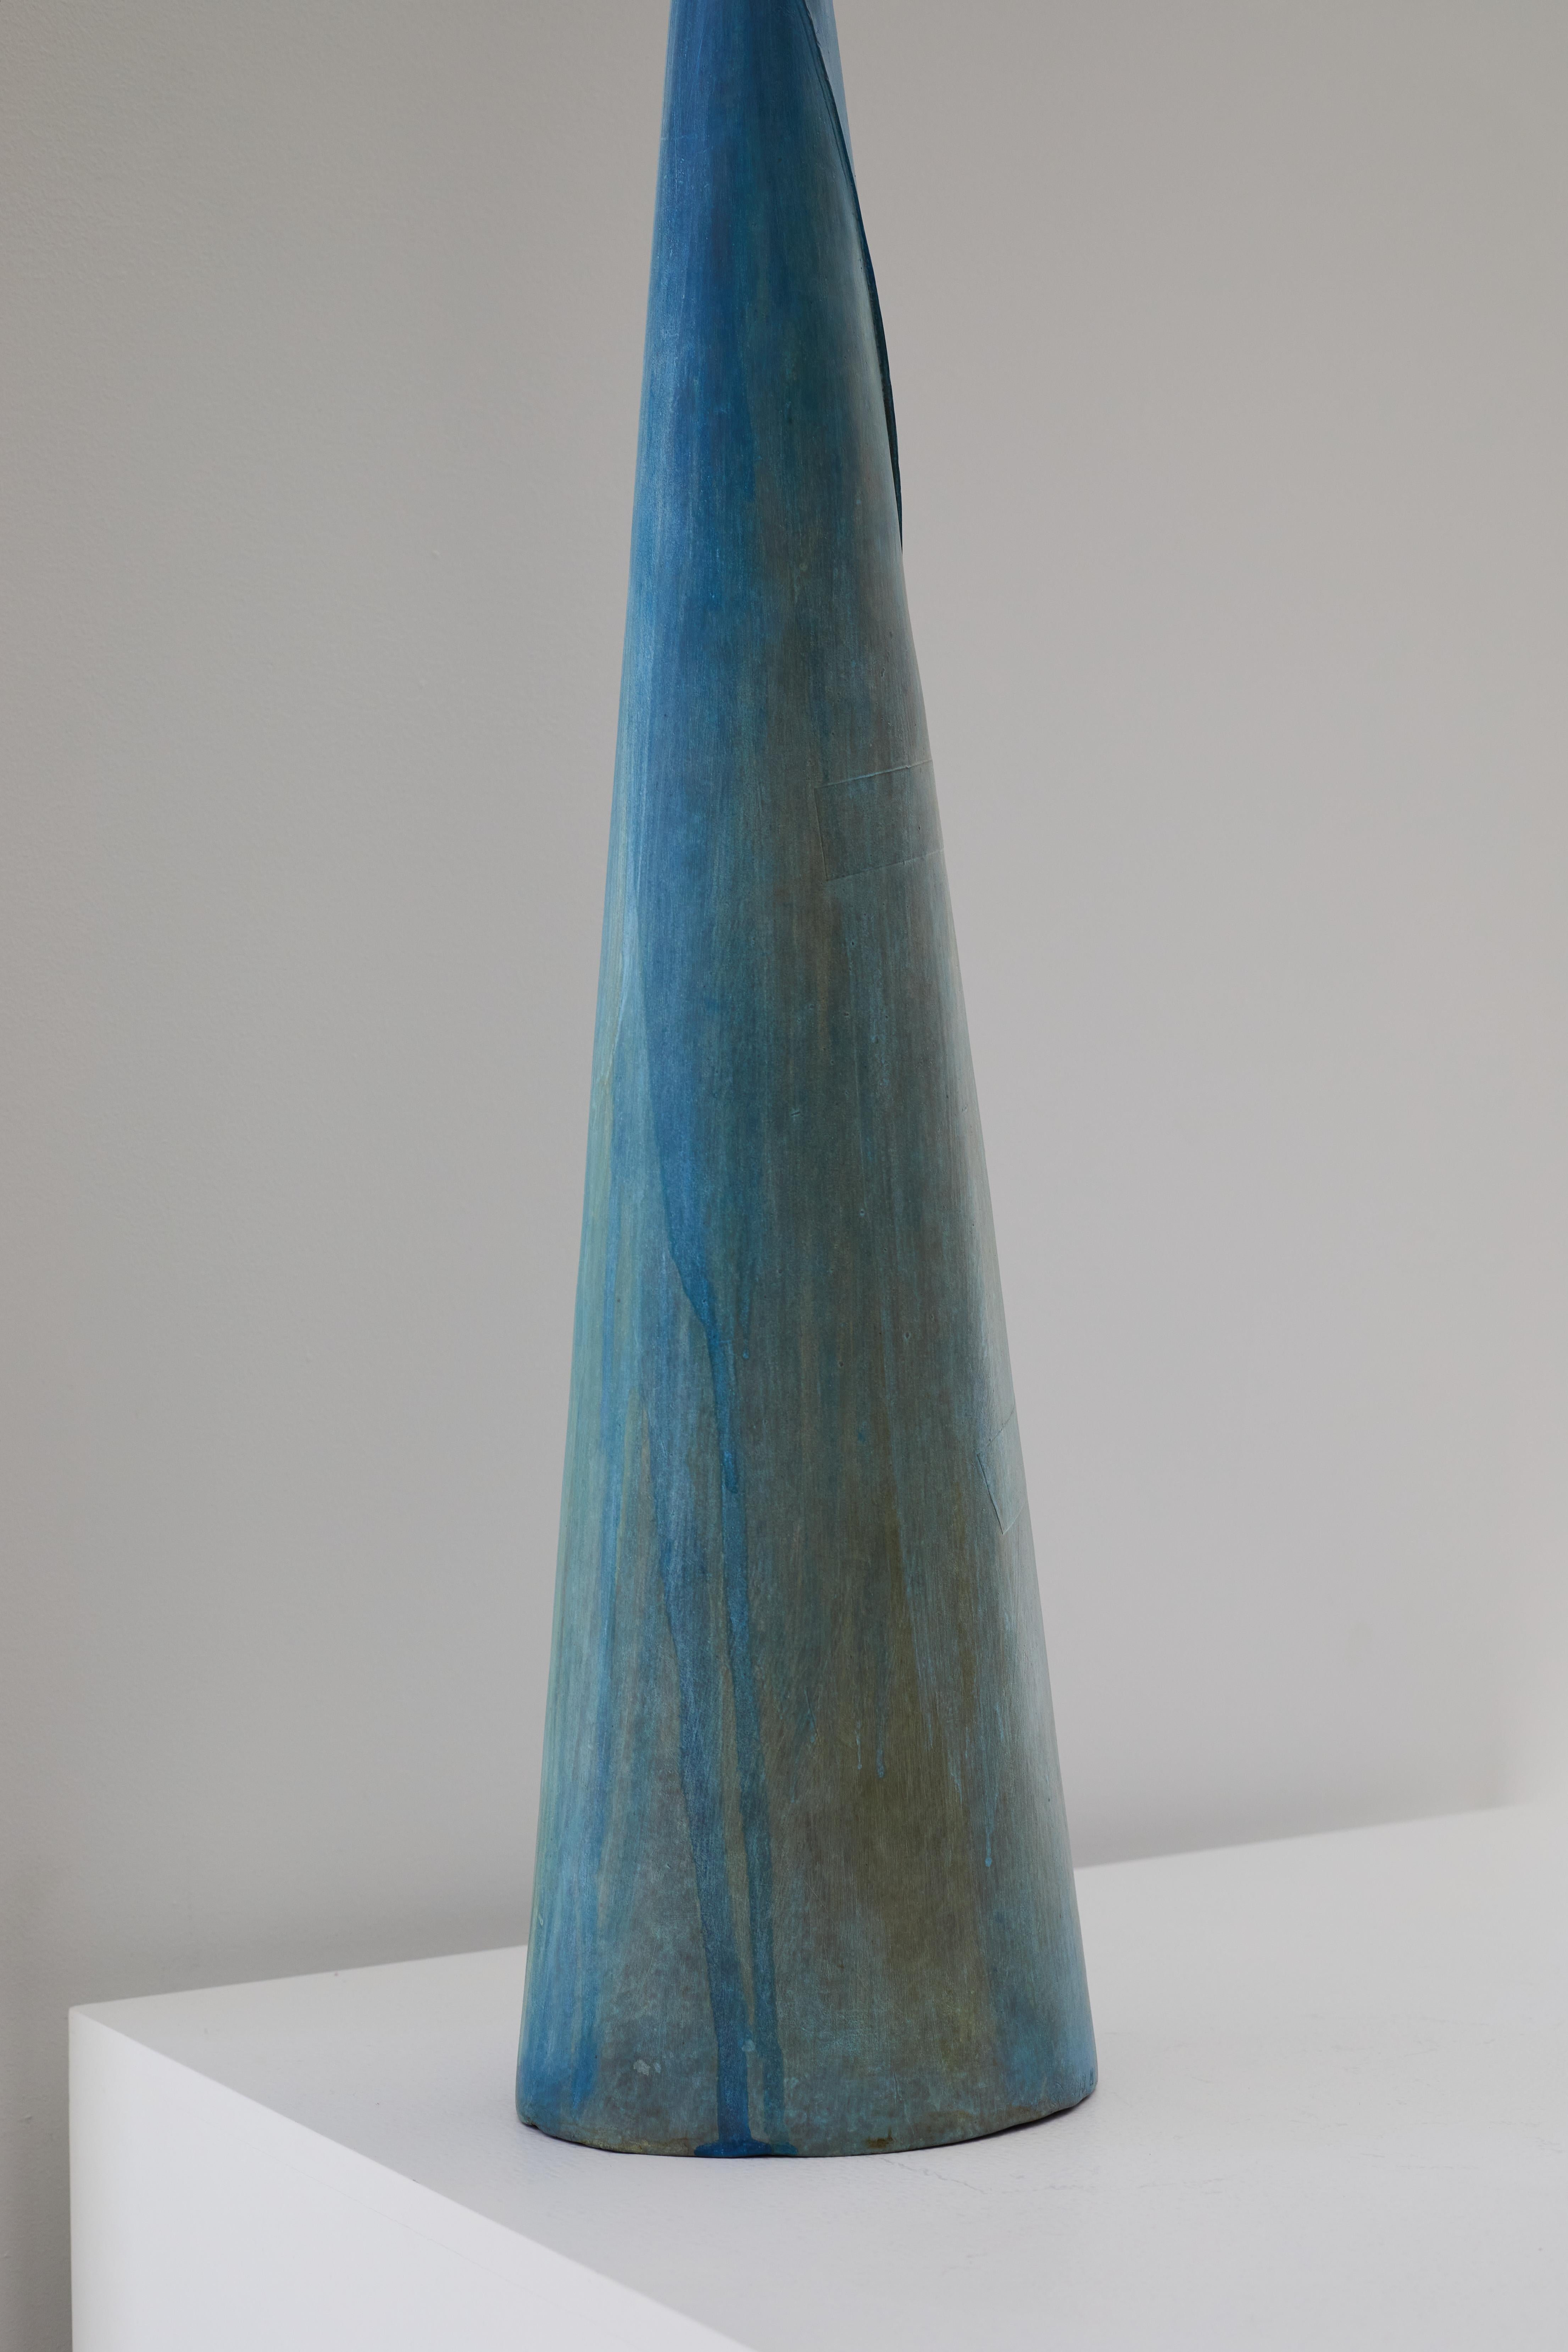 Paula Hayes
Thyrsus Vase, 2019
Cast bronze with patina
Dimensions: 24.5” H x 6.5” W x 4.5” D
Photo: Ethan Herrington.